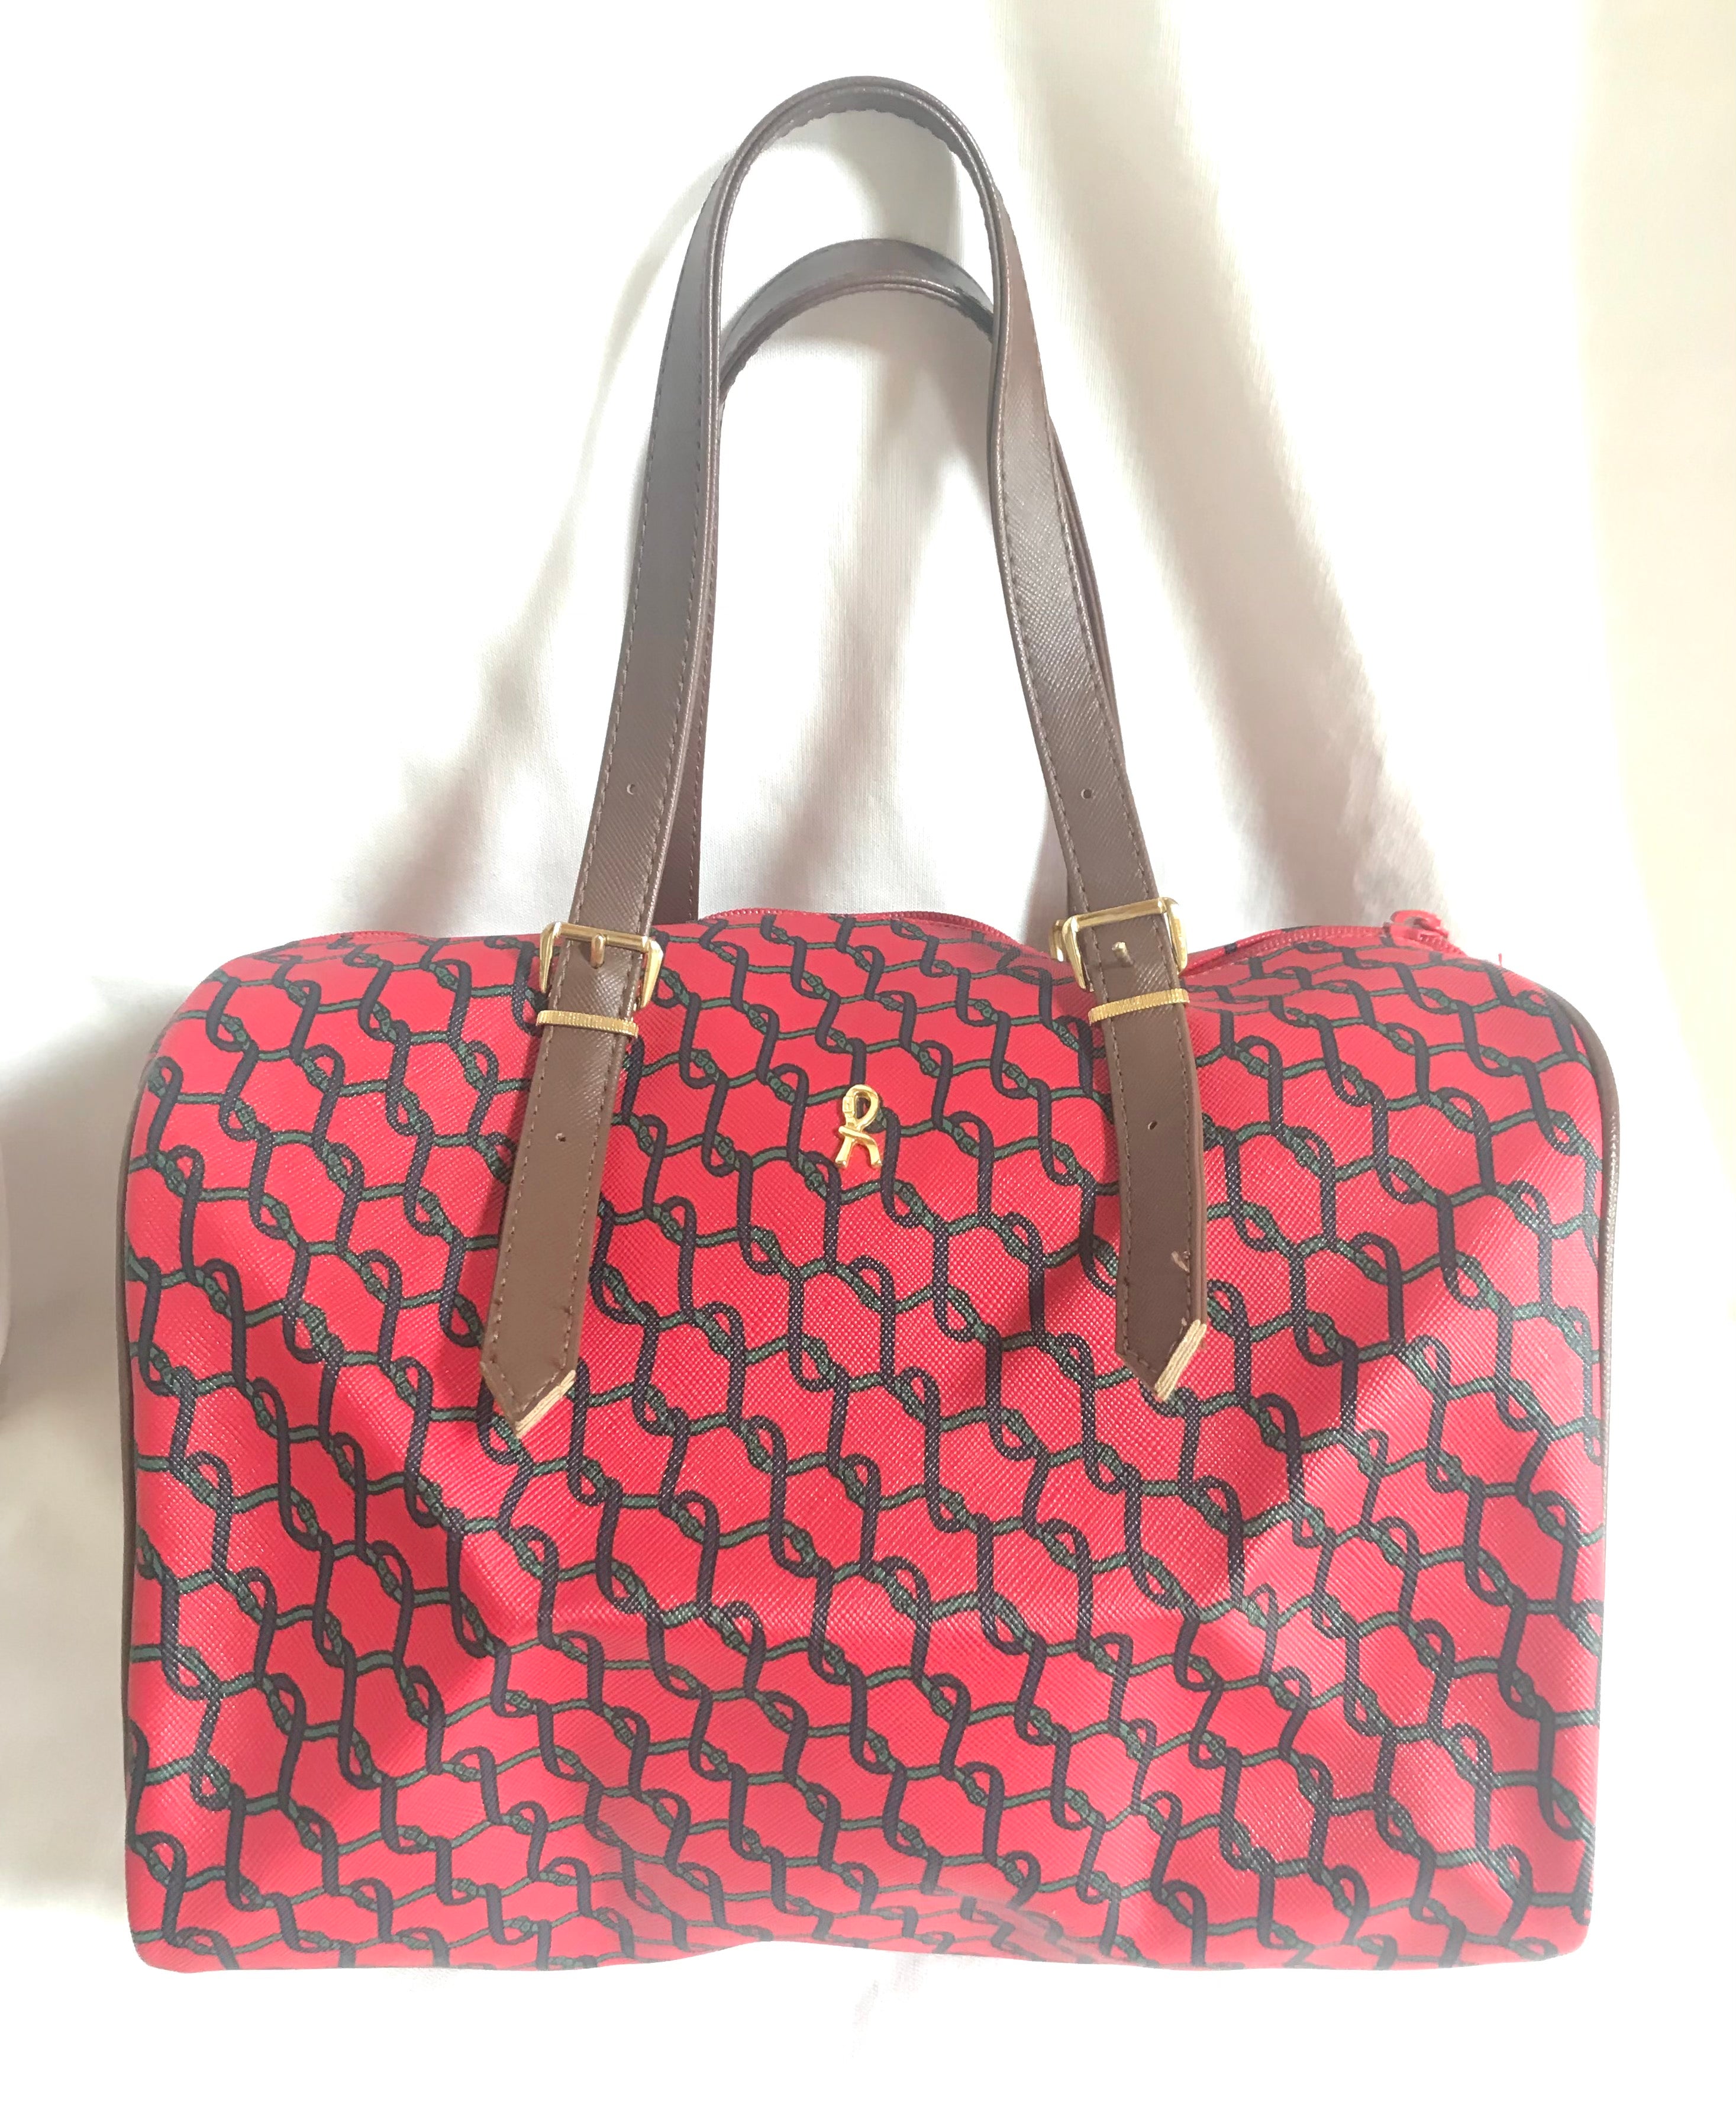 New baby : r/handbags